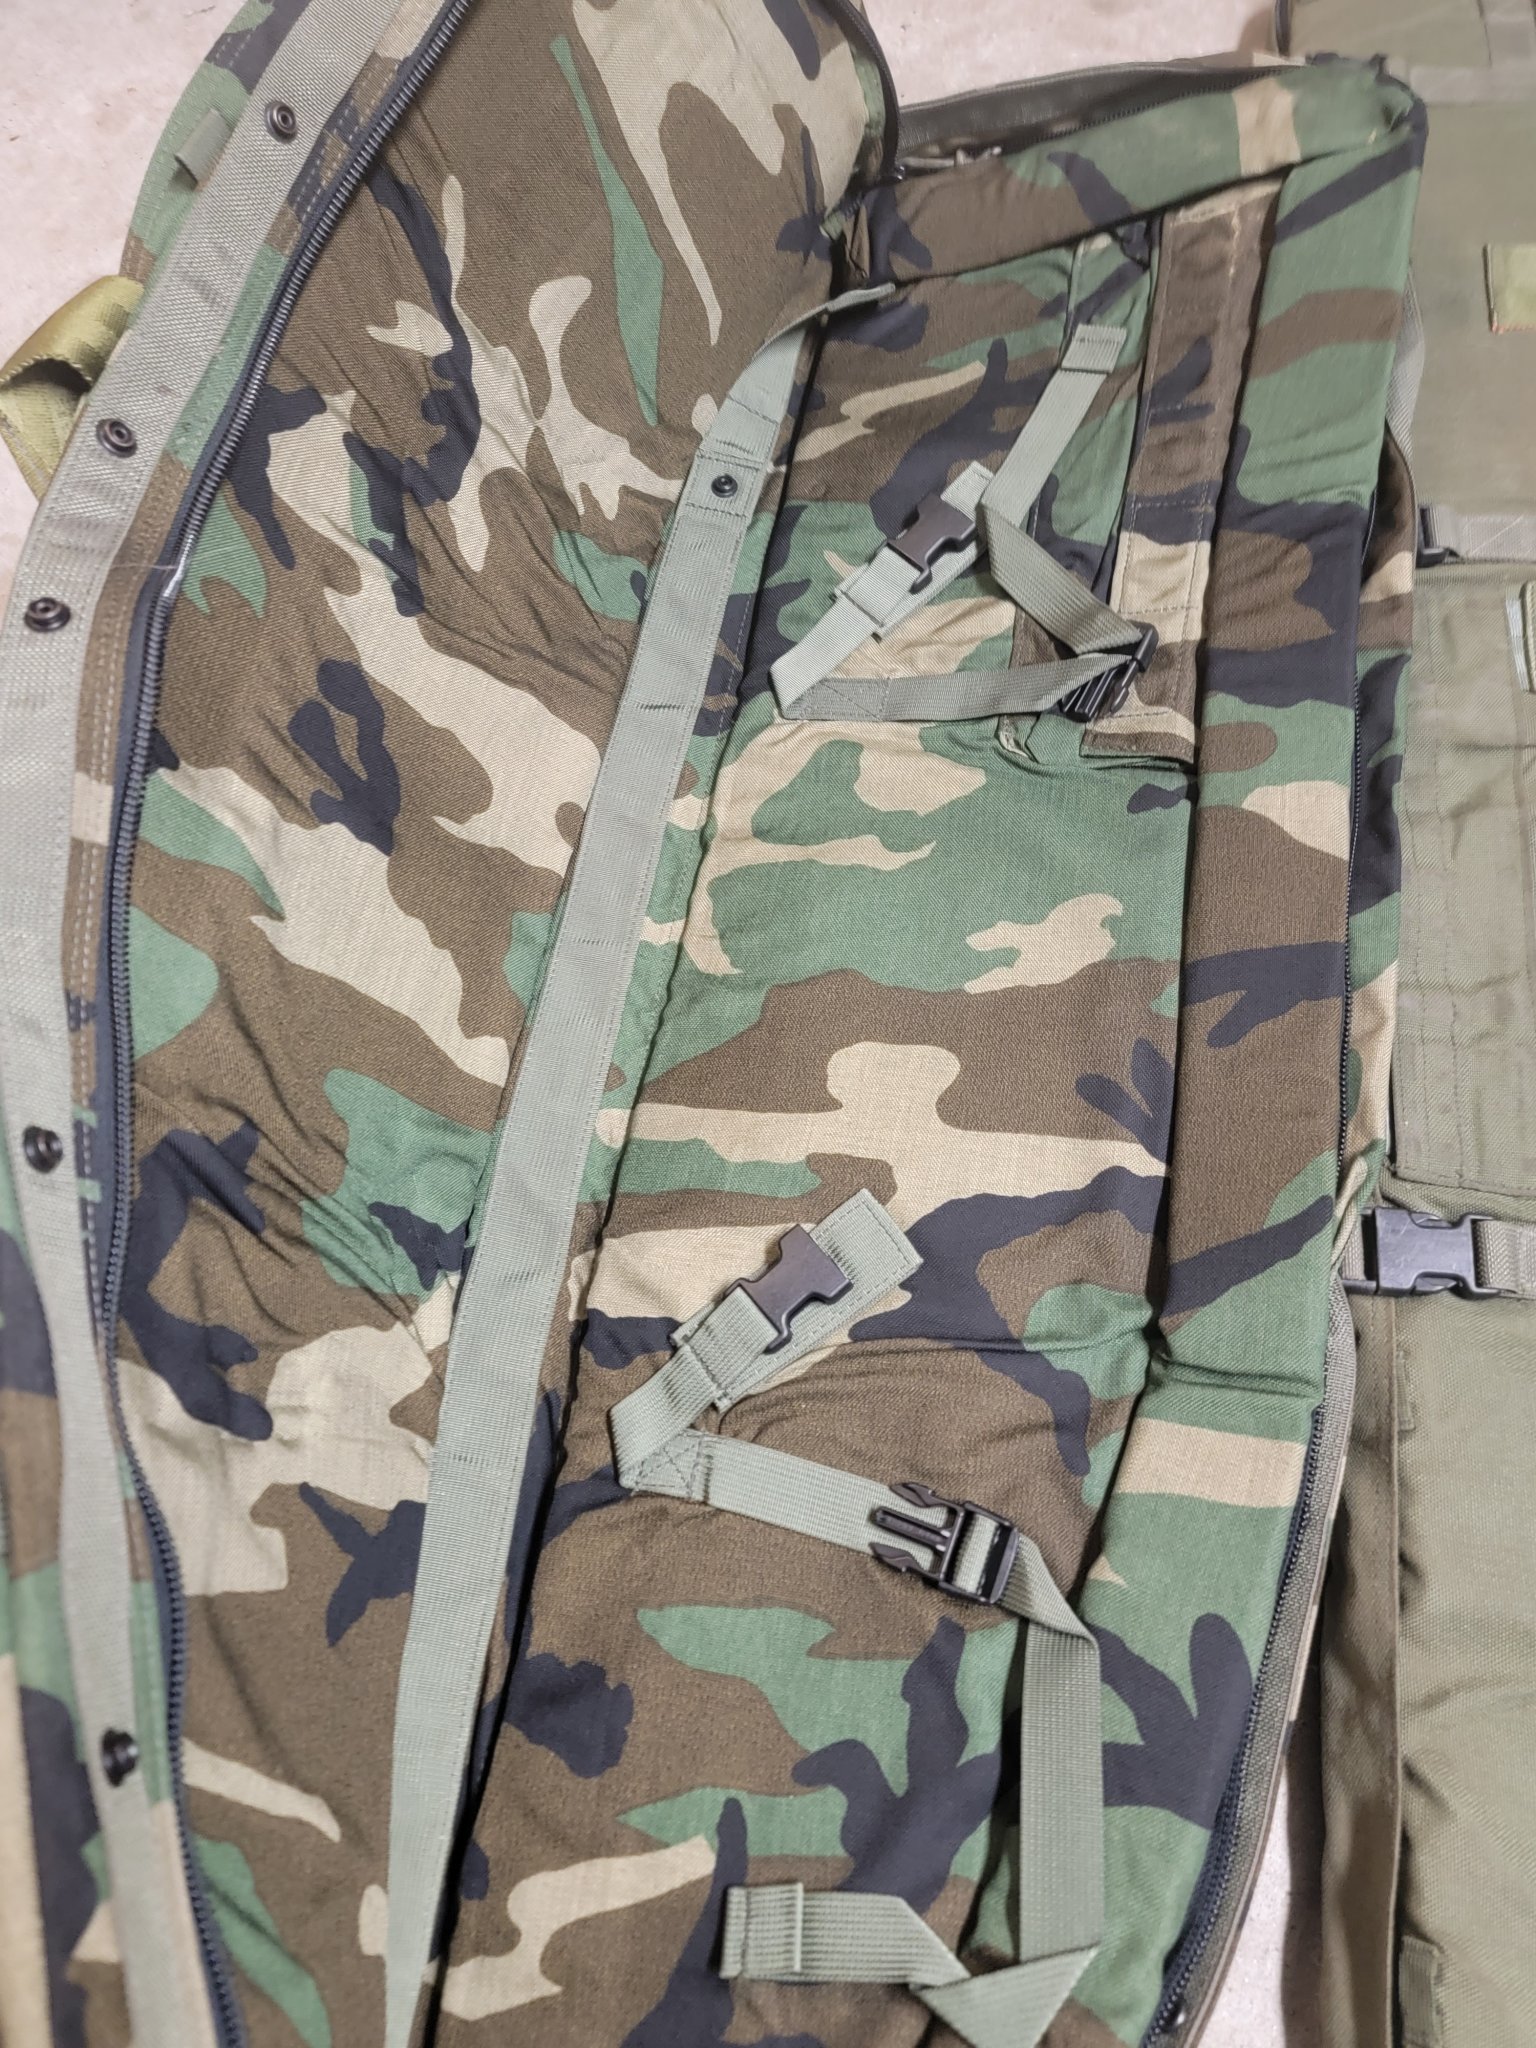 SOLD - Eagle Industries Drag bag and HSRC for sale ! | Sniper's Hide Forum